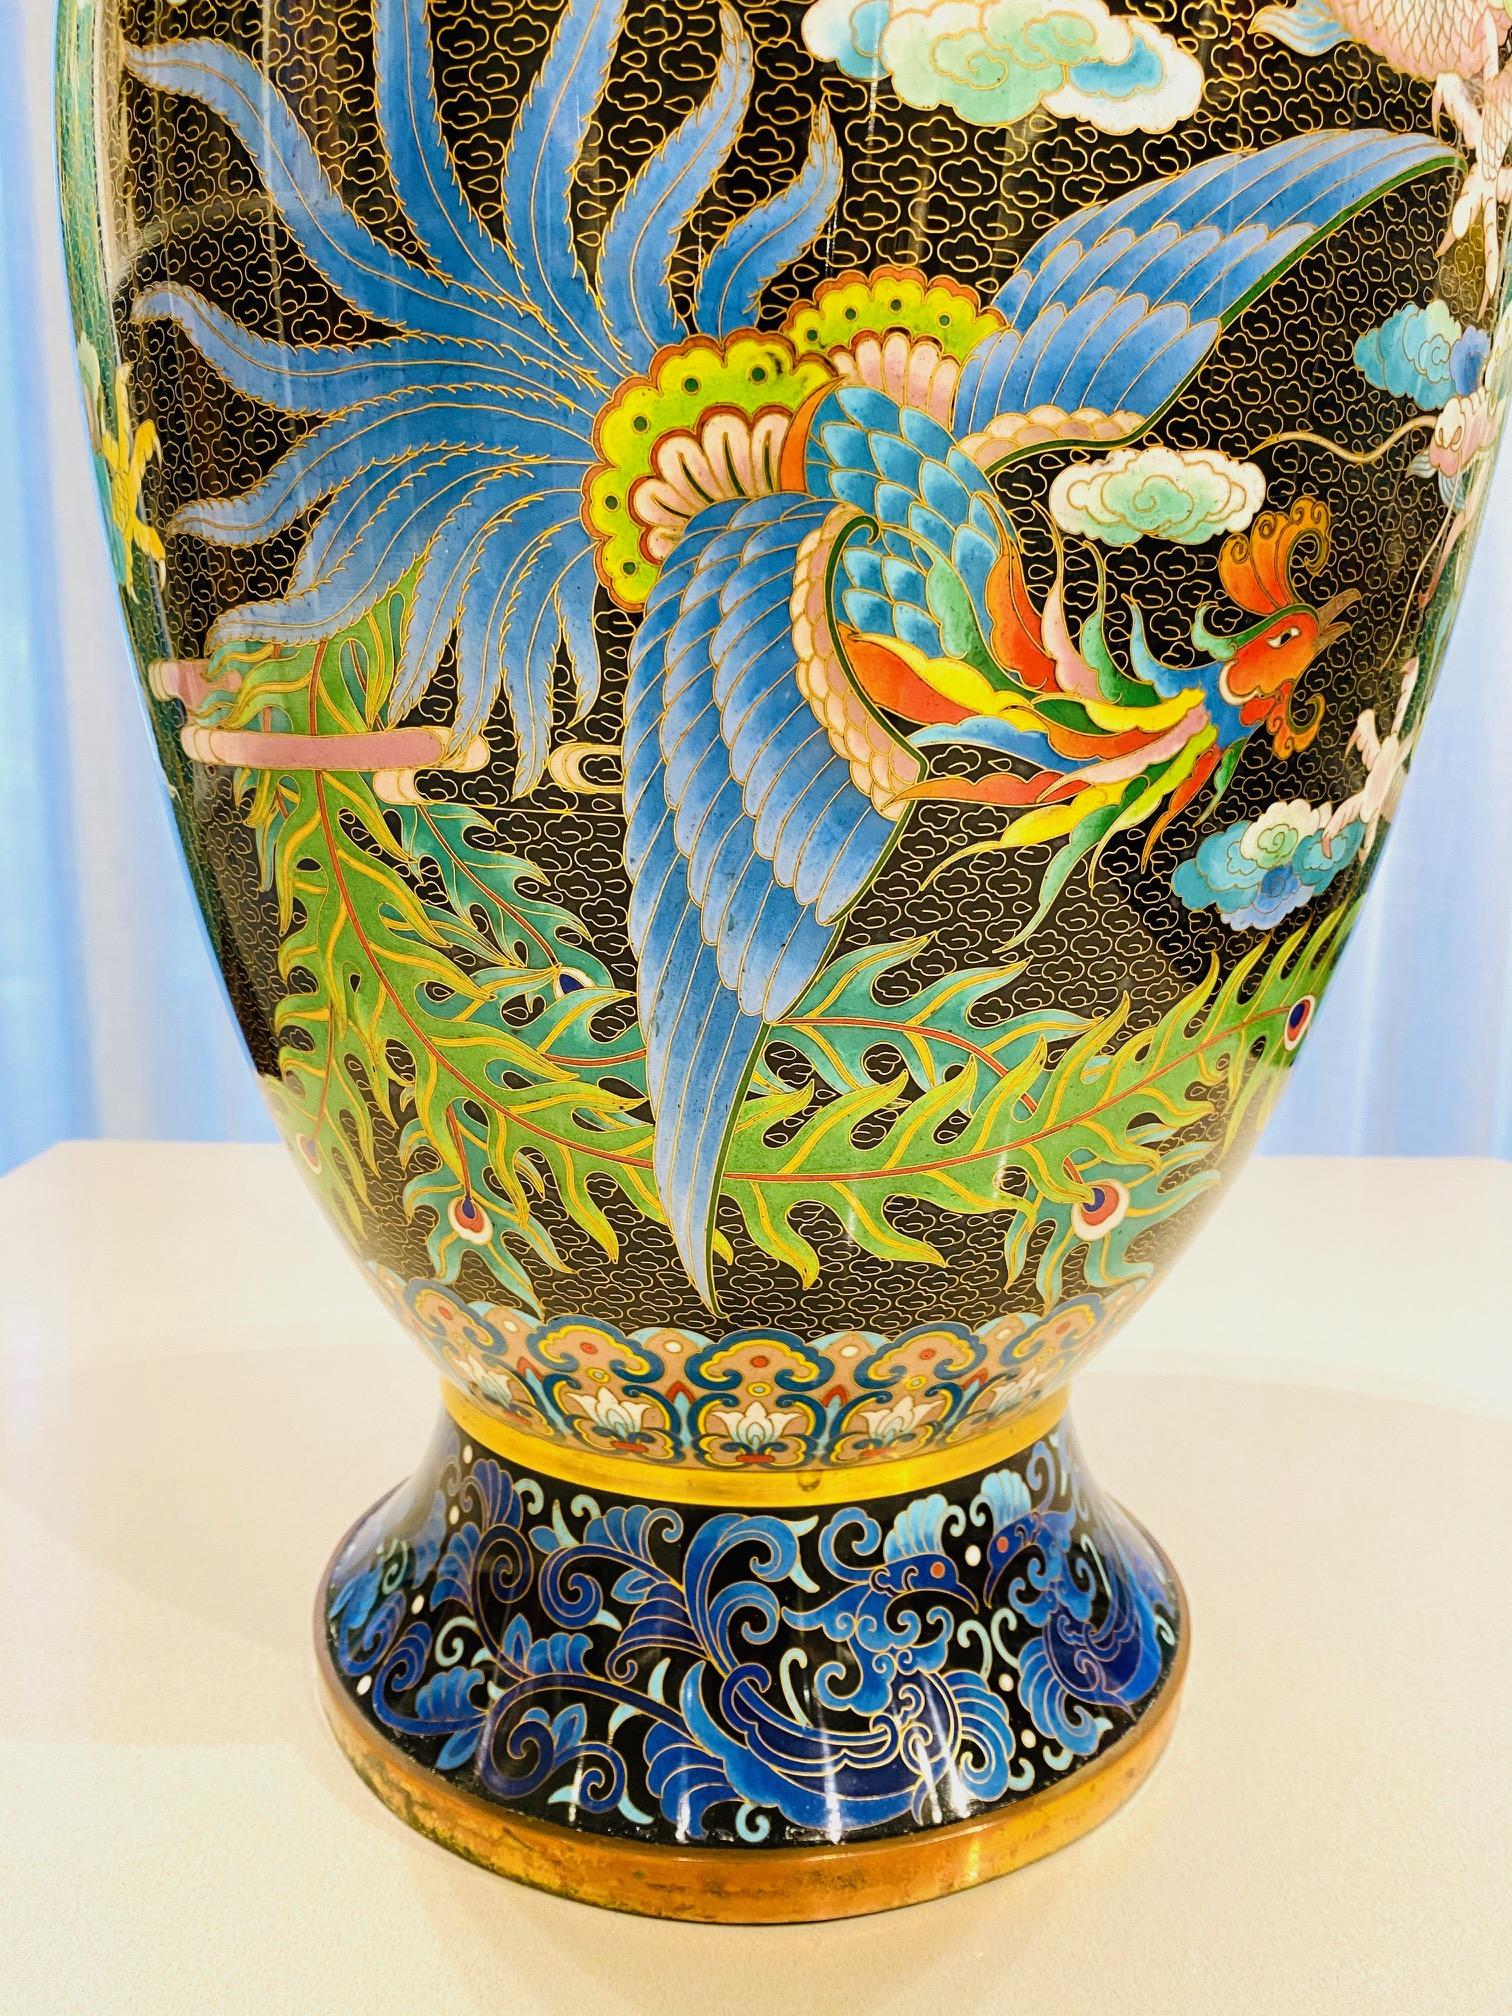 Cast Vintage Chinese Cloisonné Vase with Dragon and Phoenix, c. 1940's